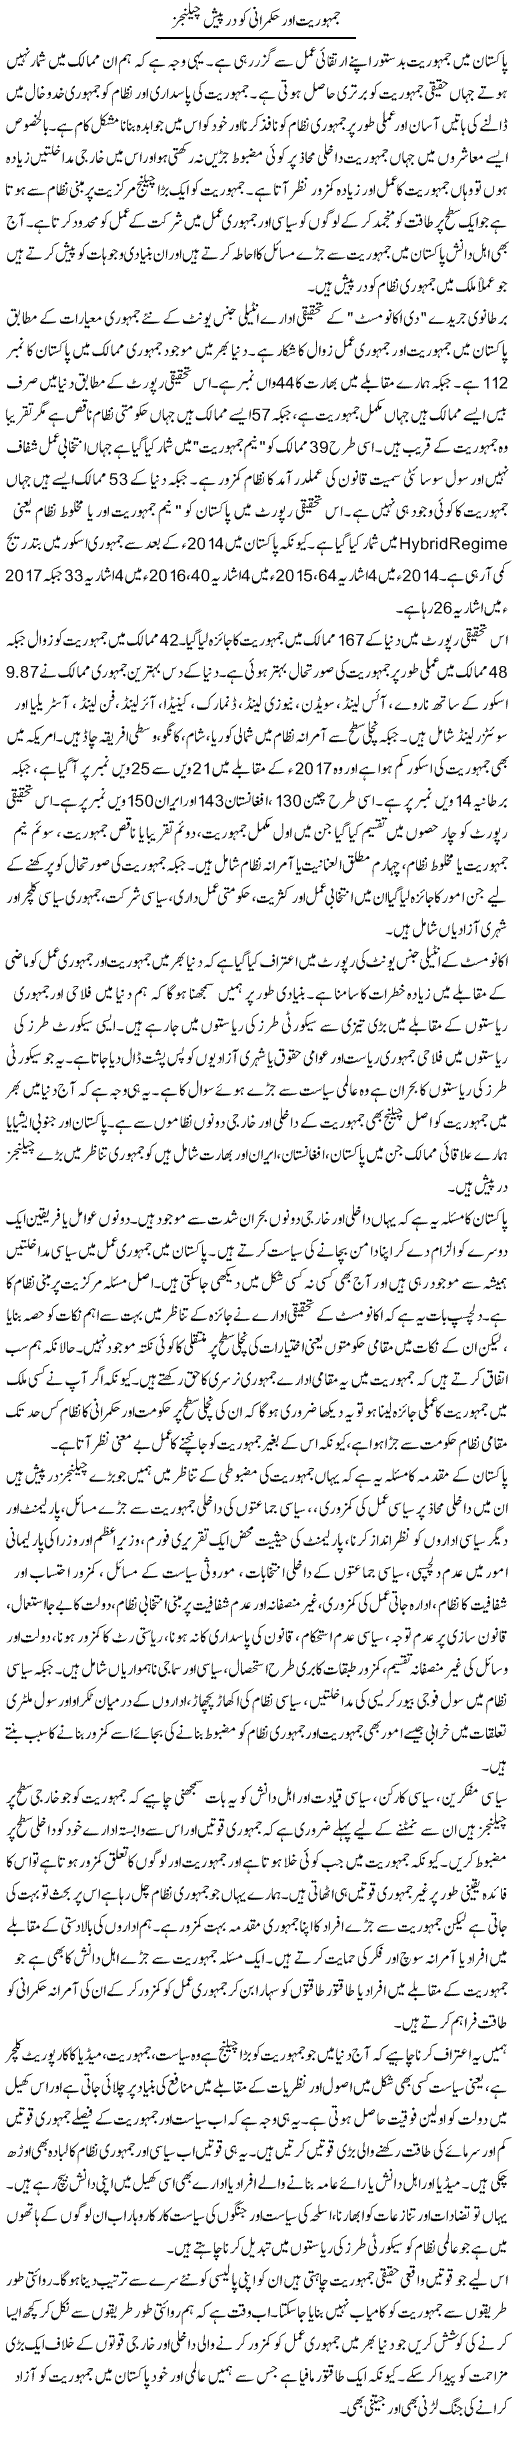 Jamhoriat Aur Hukmarani Ko Darpesh Challenges | Salman Abid | Daily Urdu Columns